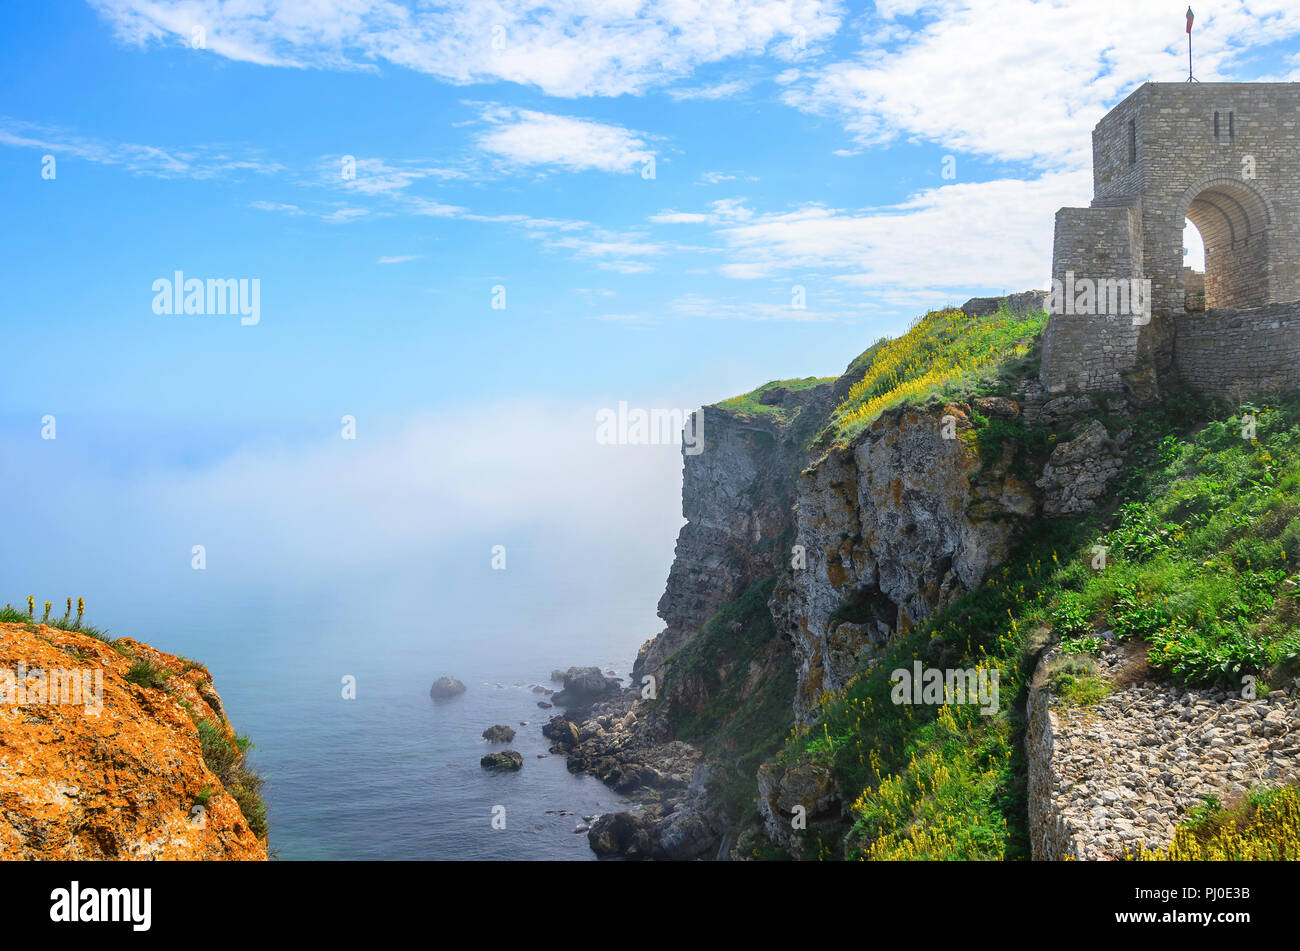 Festung auf Kap Kaliakra, Bulgarien. Blick auf das Meer. Stockfoto